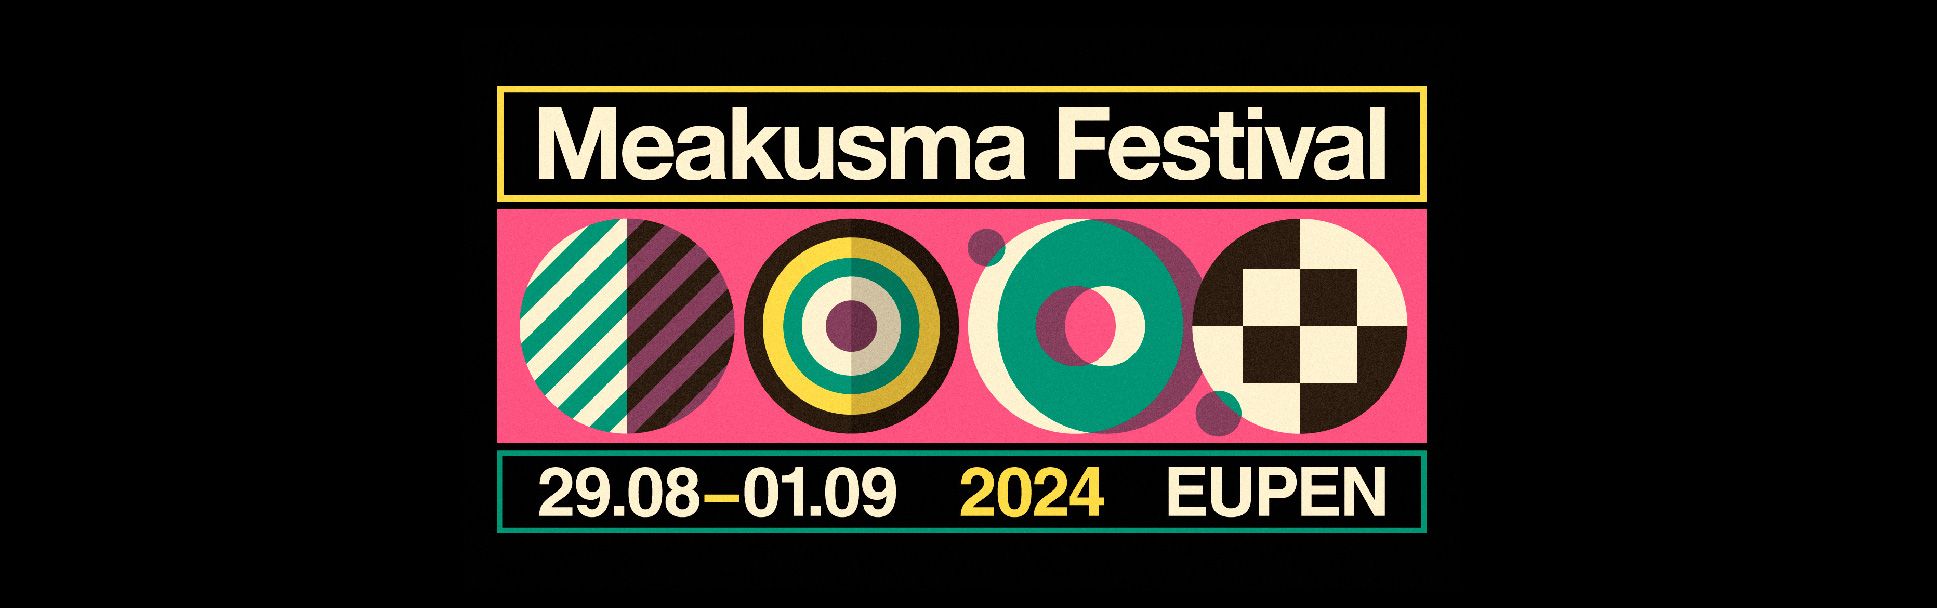 Meakusma Festival header